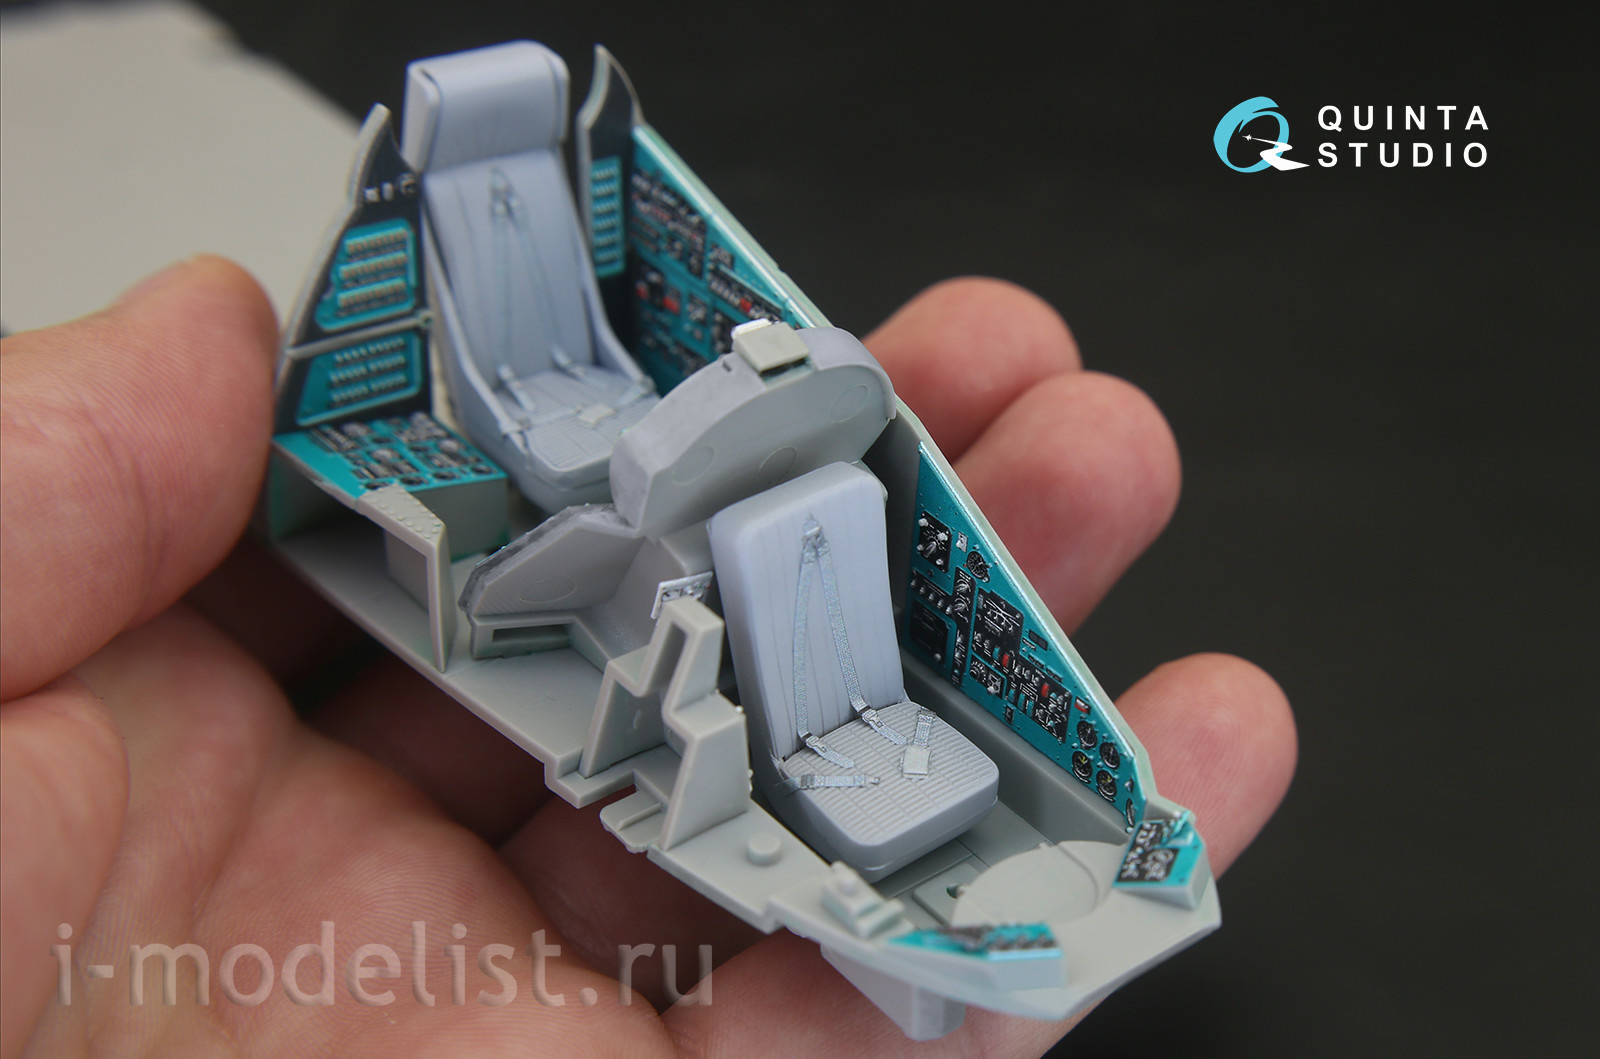 QD35020 Quinta Studio 1/35 3D Decal of the Mi-24V cabin interior (for the Trumpeter model)